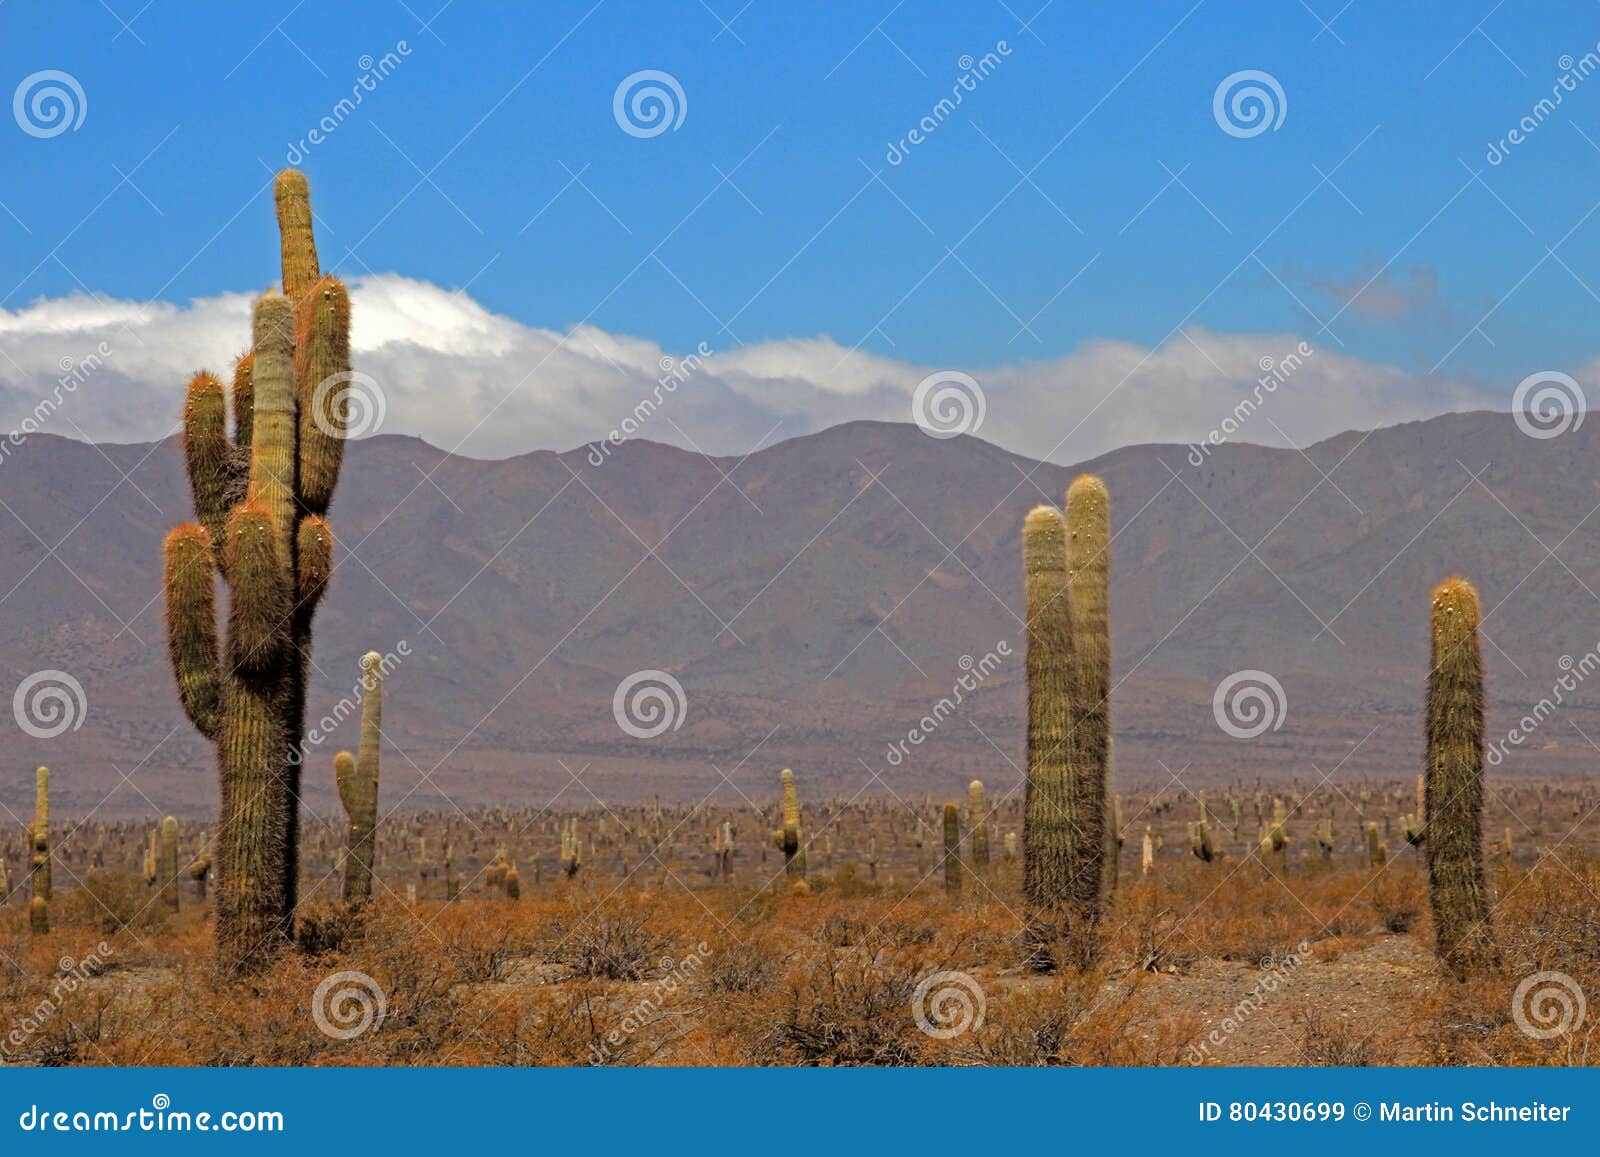 cactus forest, cardones national park, cachi, argentina